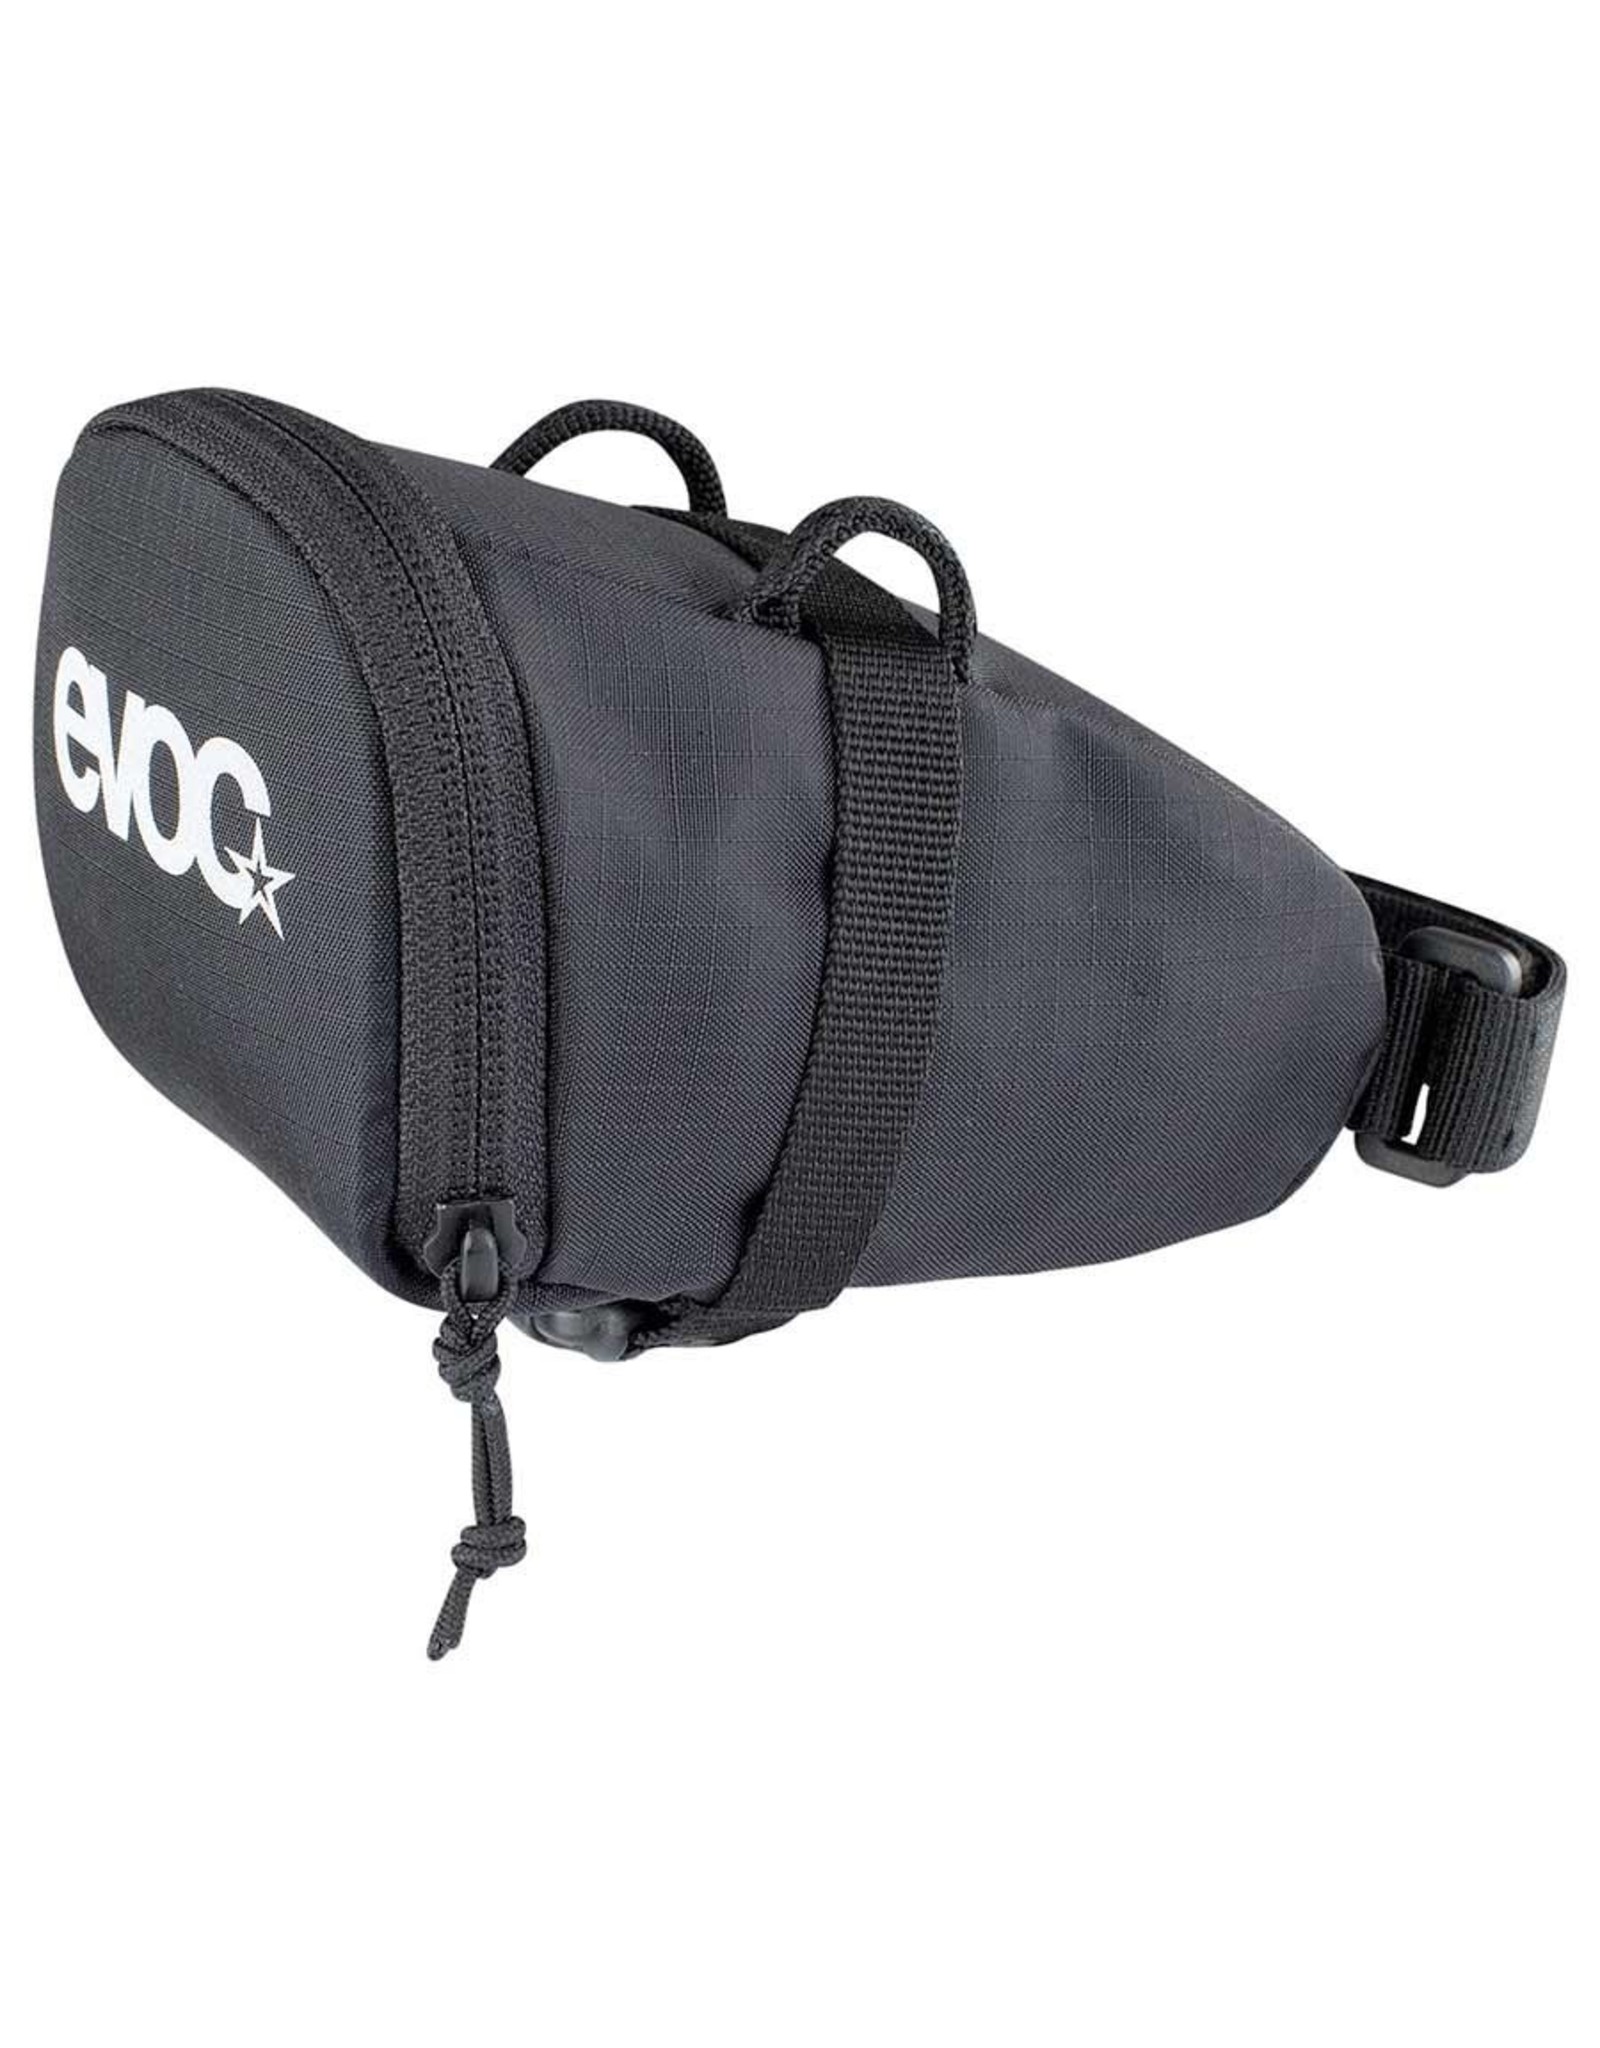 EVOC EVOC Seat Bag M 0.7L